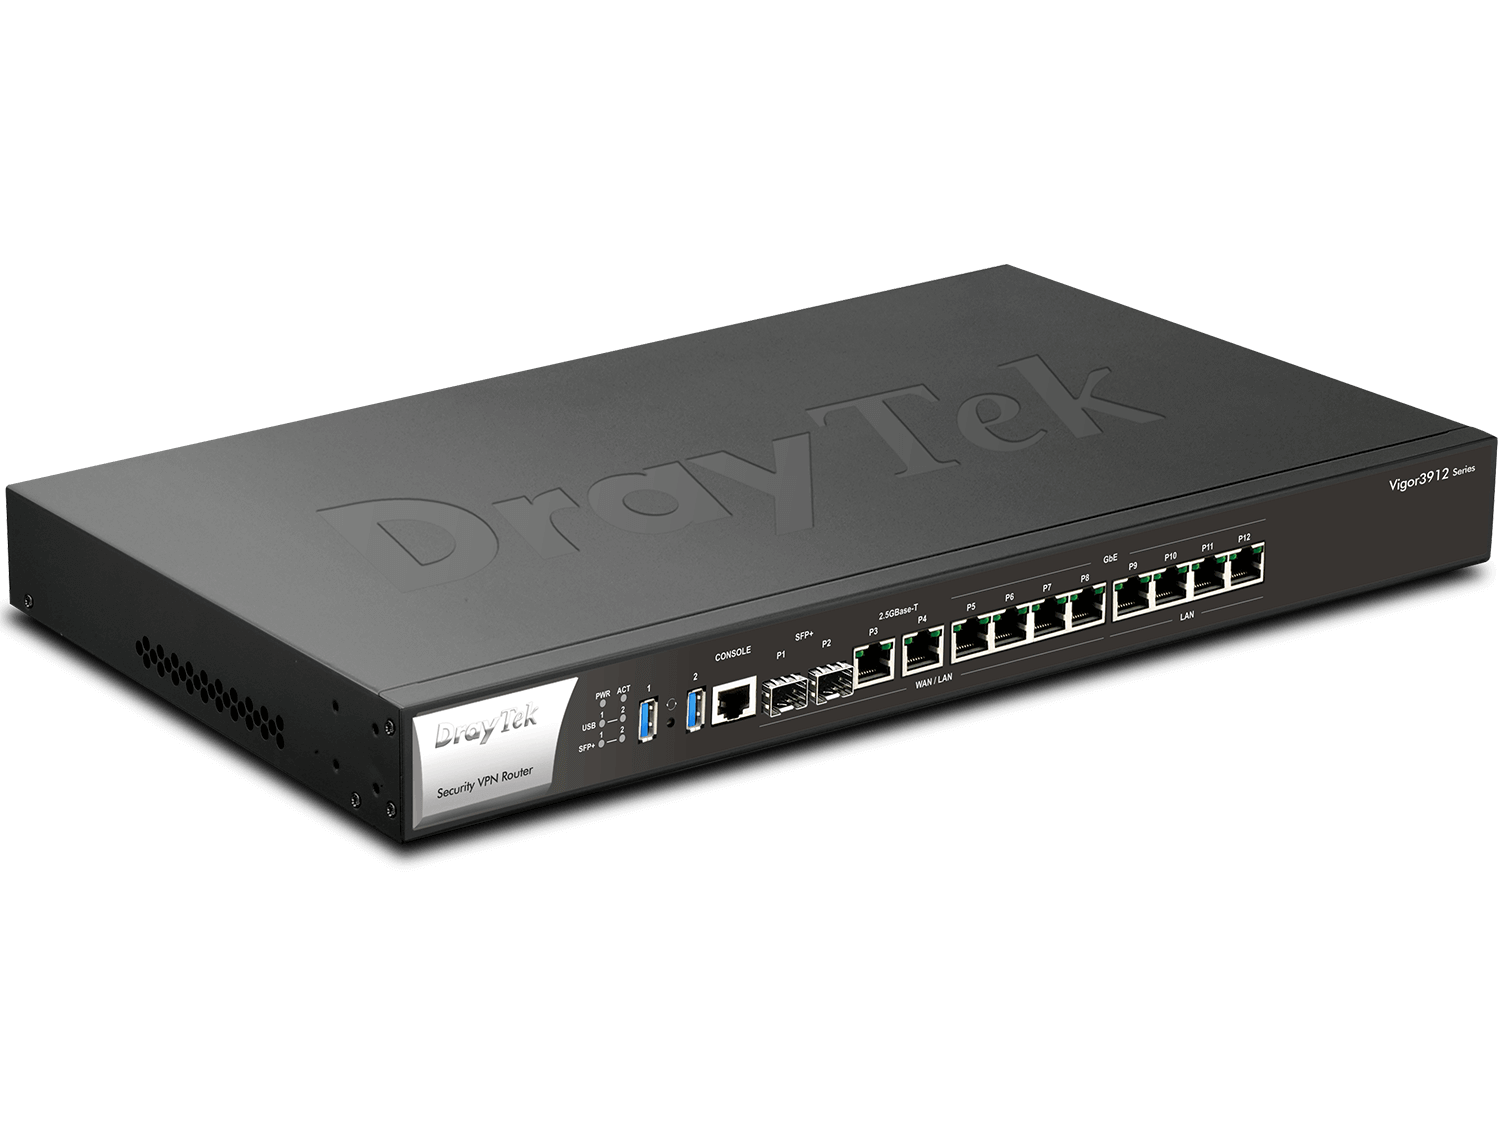 Draytek 3912 8 Port MultiWAN Broadband VPN Router QuadCore Processor Right View